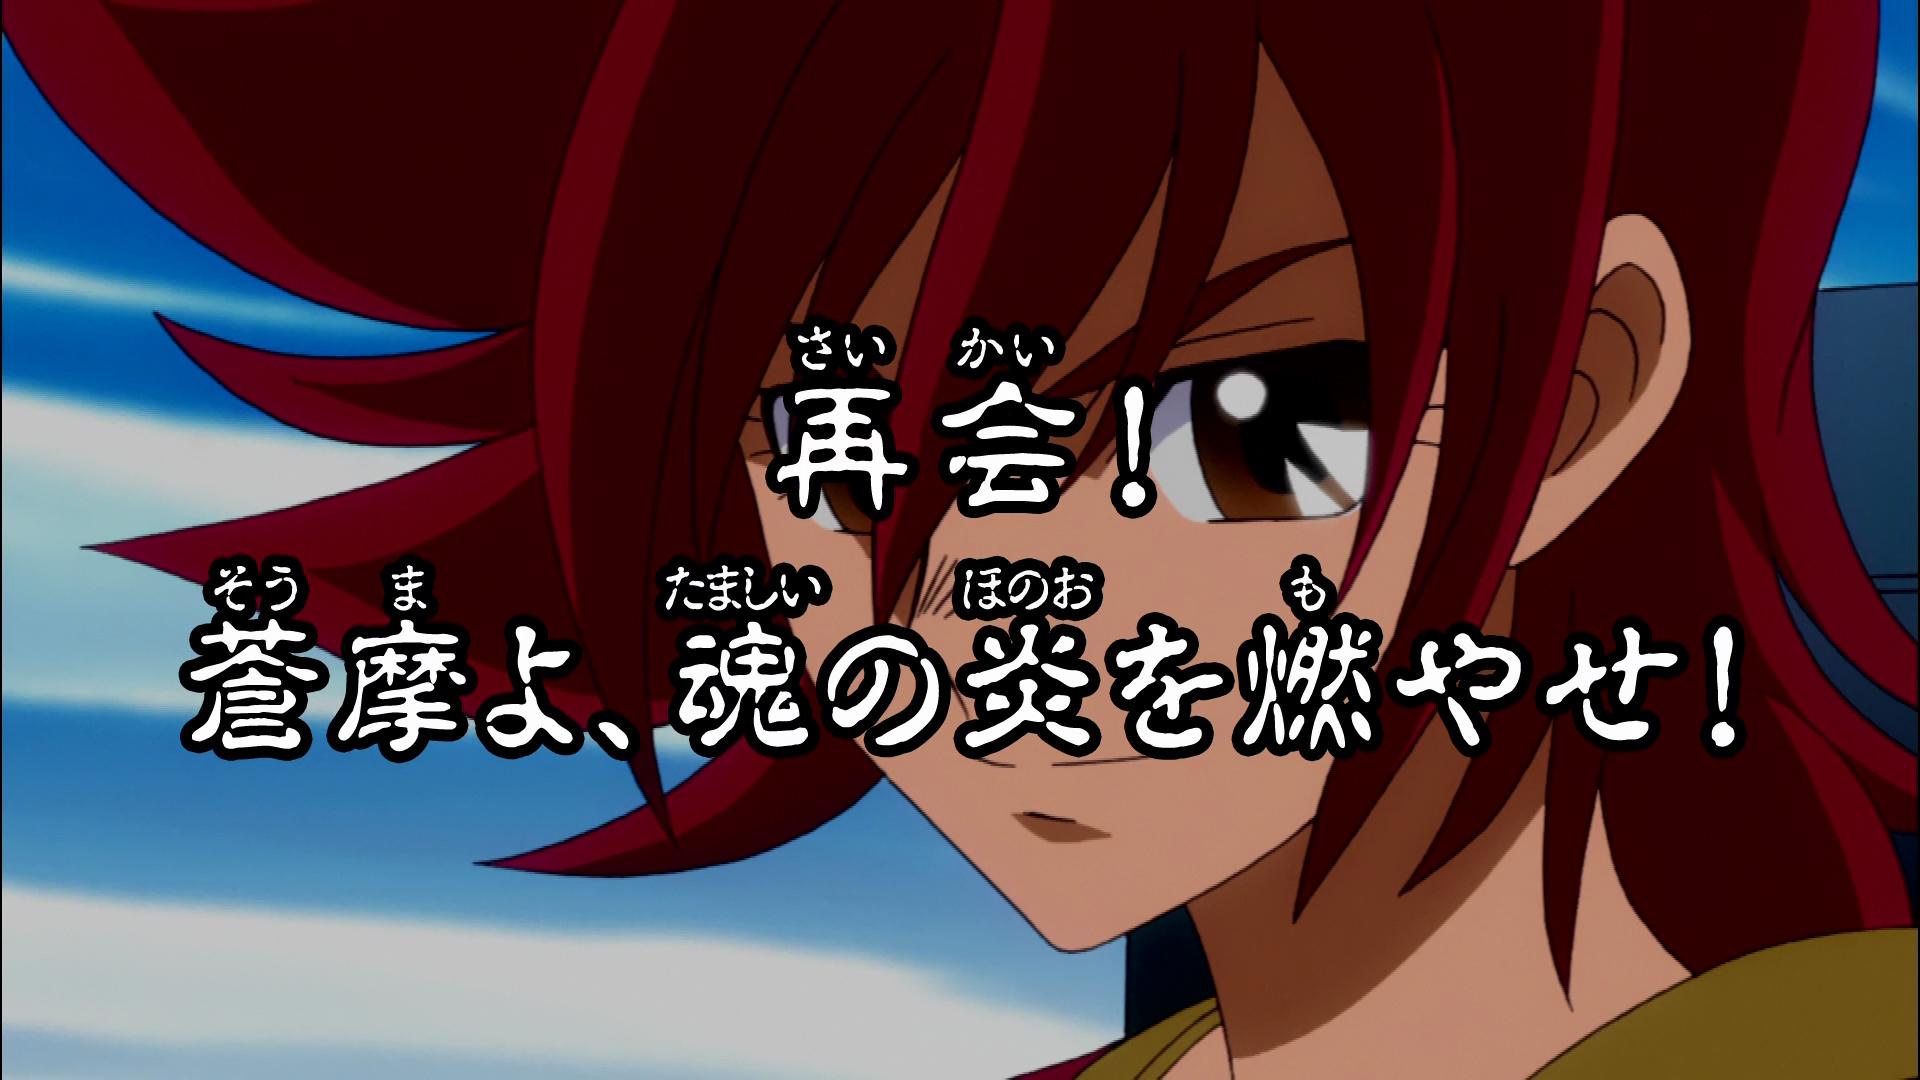 Saint Seiya Omega Ω - Episode 53, Preview 1 (TV Asahi Website) 